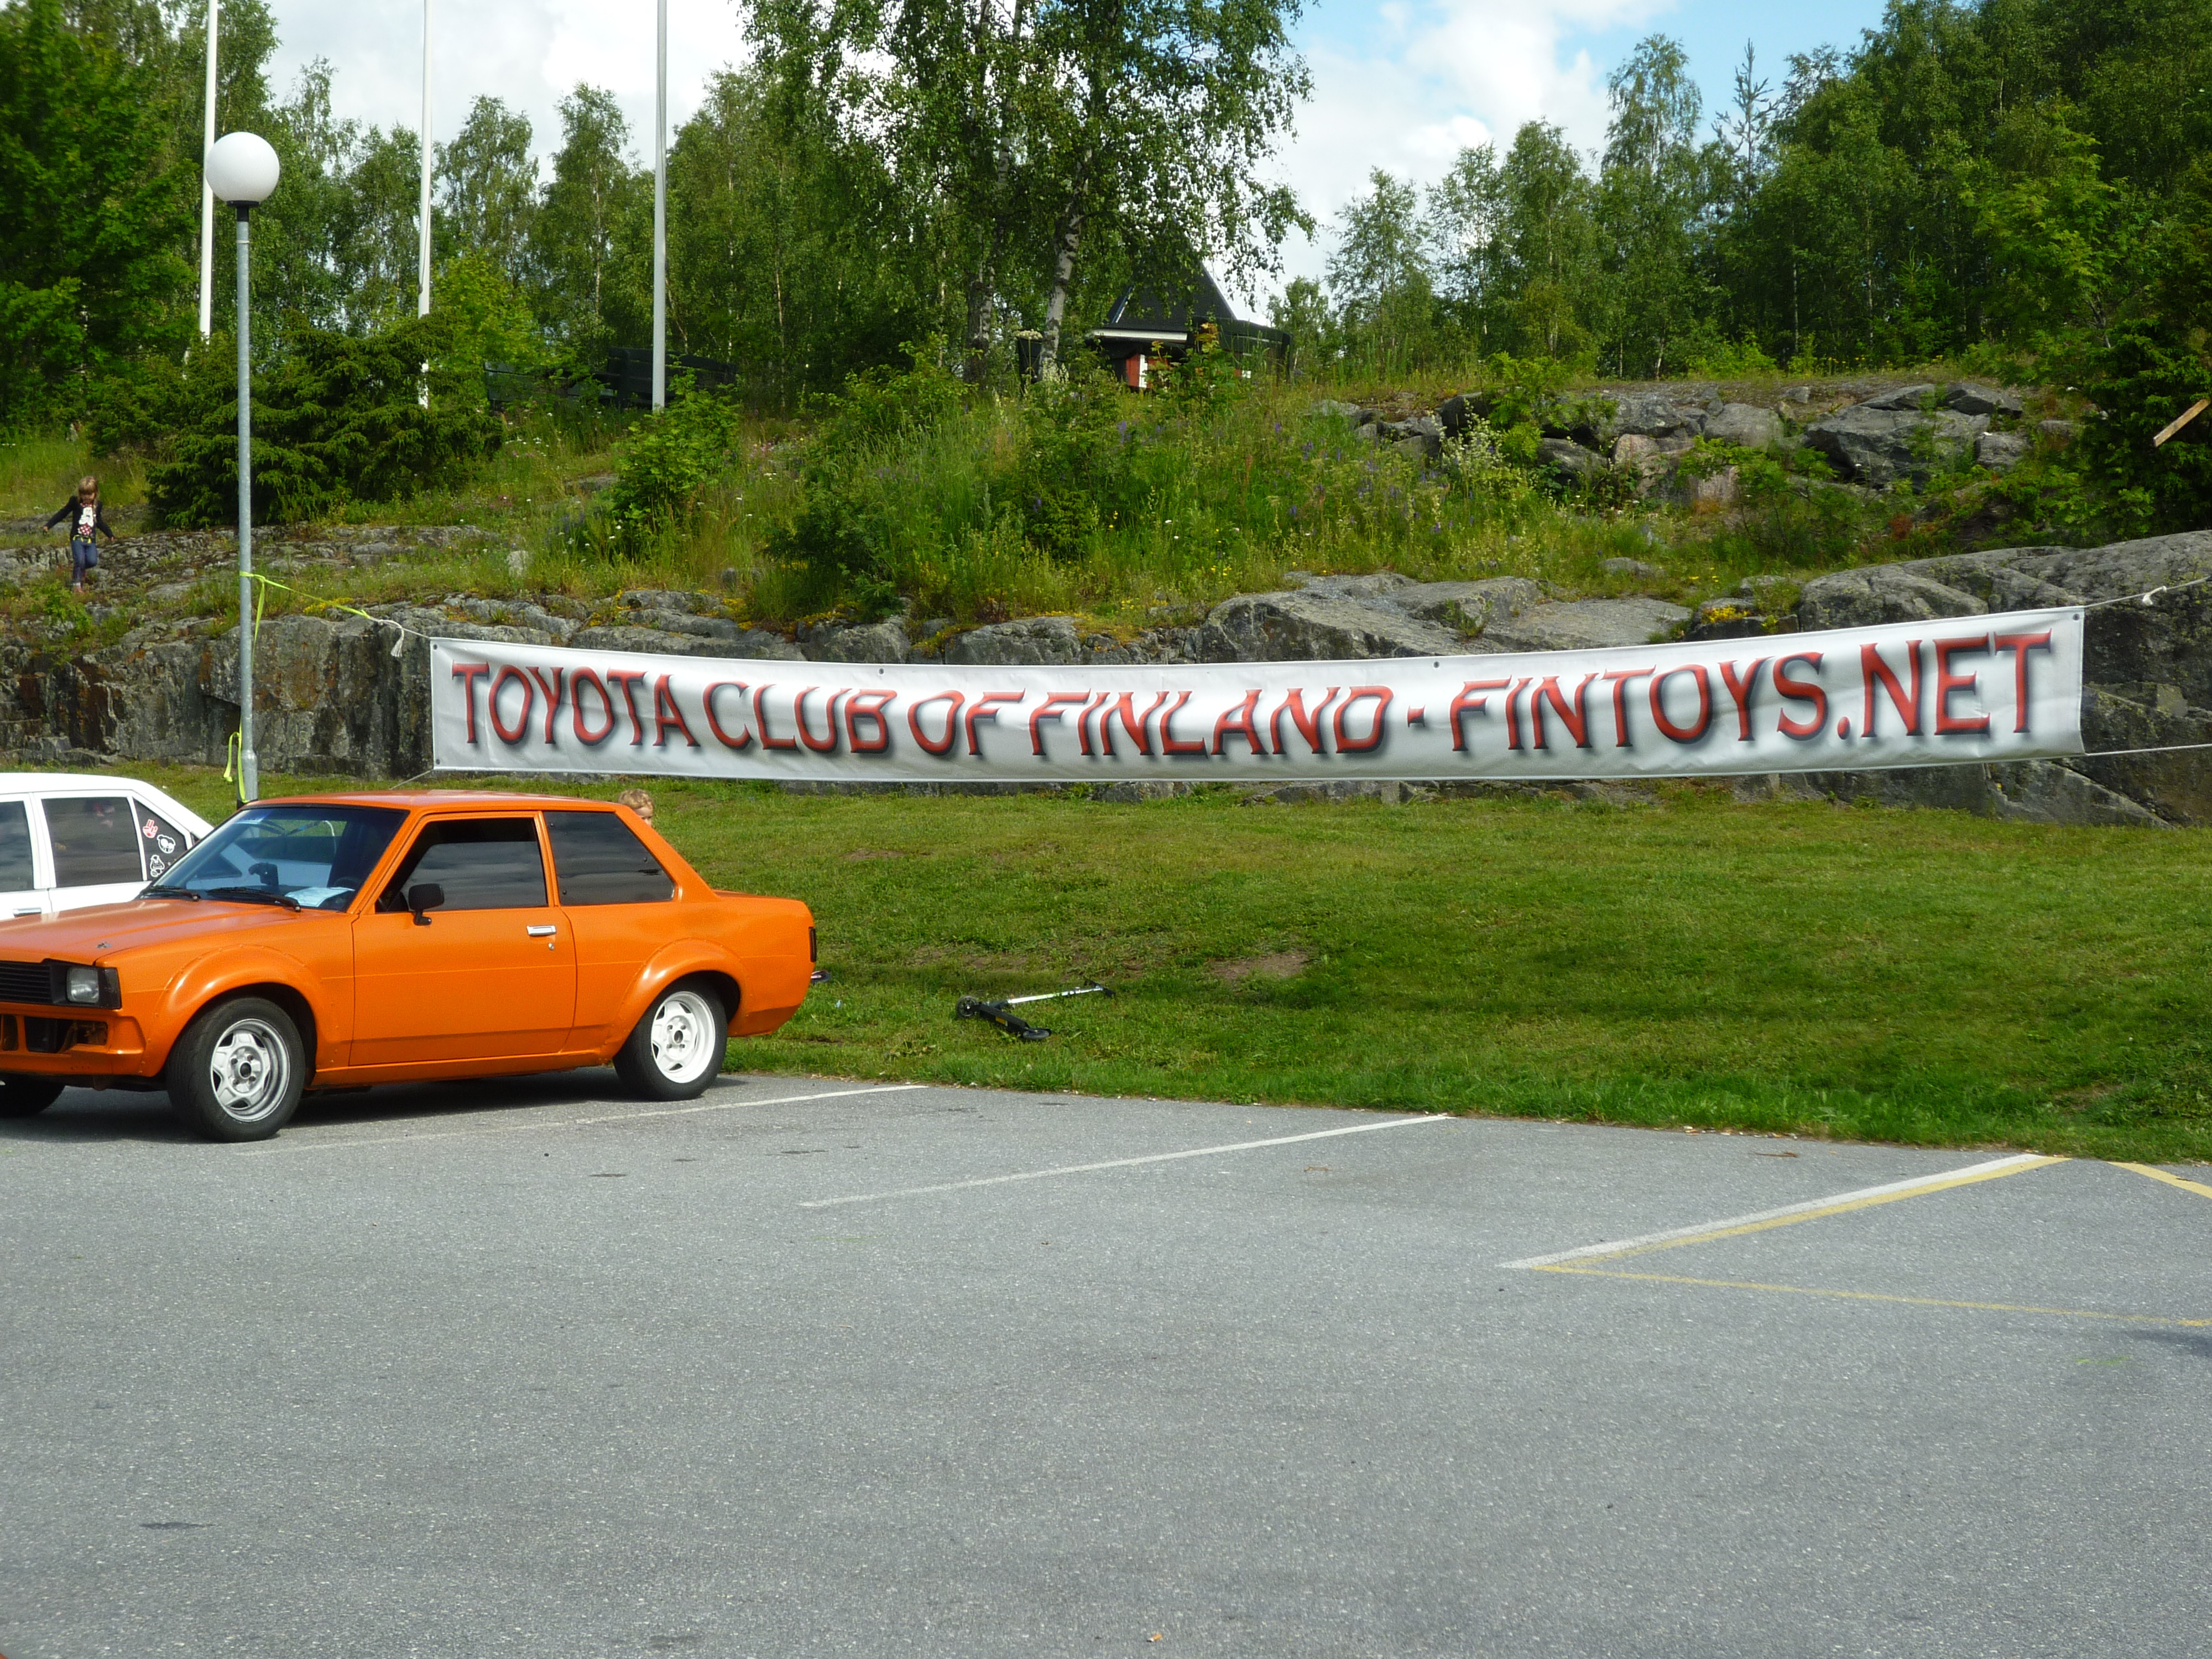 Fintoys kesÃ¤tapahtuma 10-12.7.2015 Merikarvia, Toyota Club of Finland -banneri ja oranssi deksu.